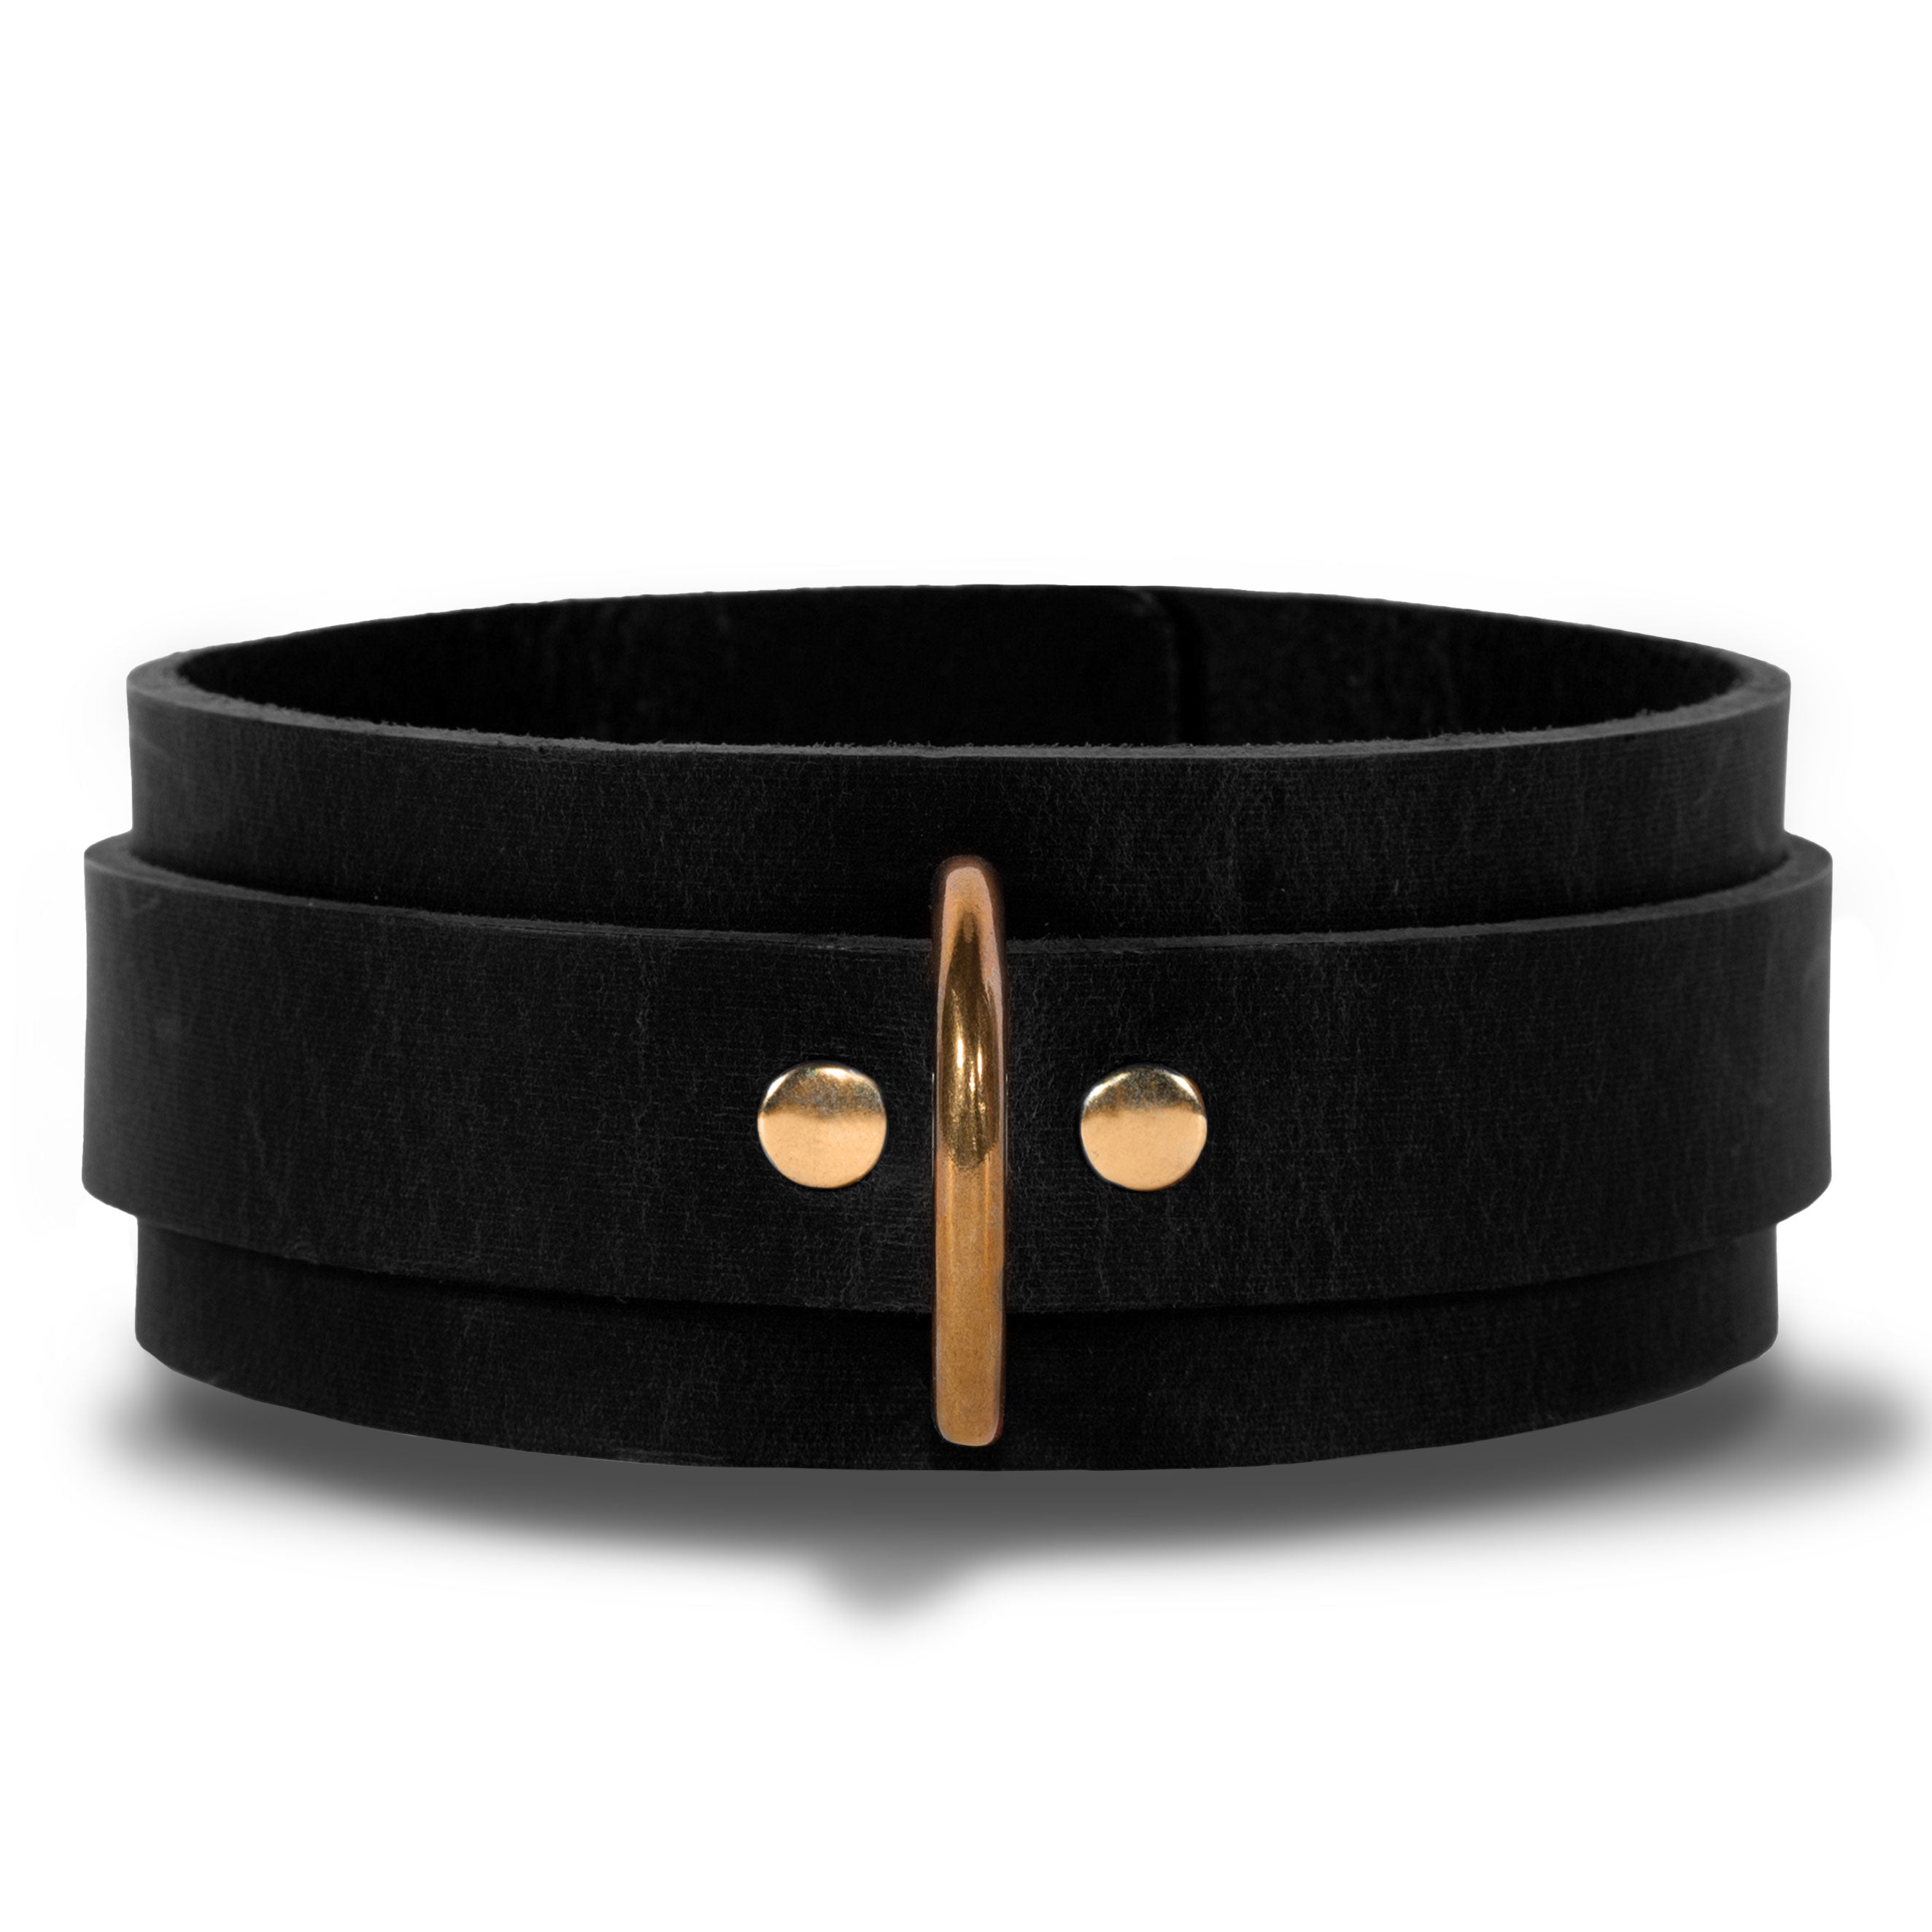 Luxury Black Leather Nickel-Free BDSM Collar